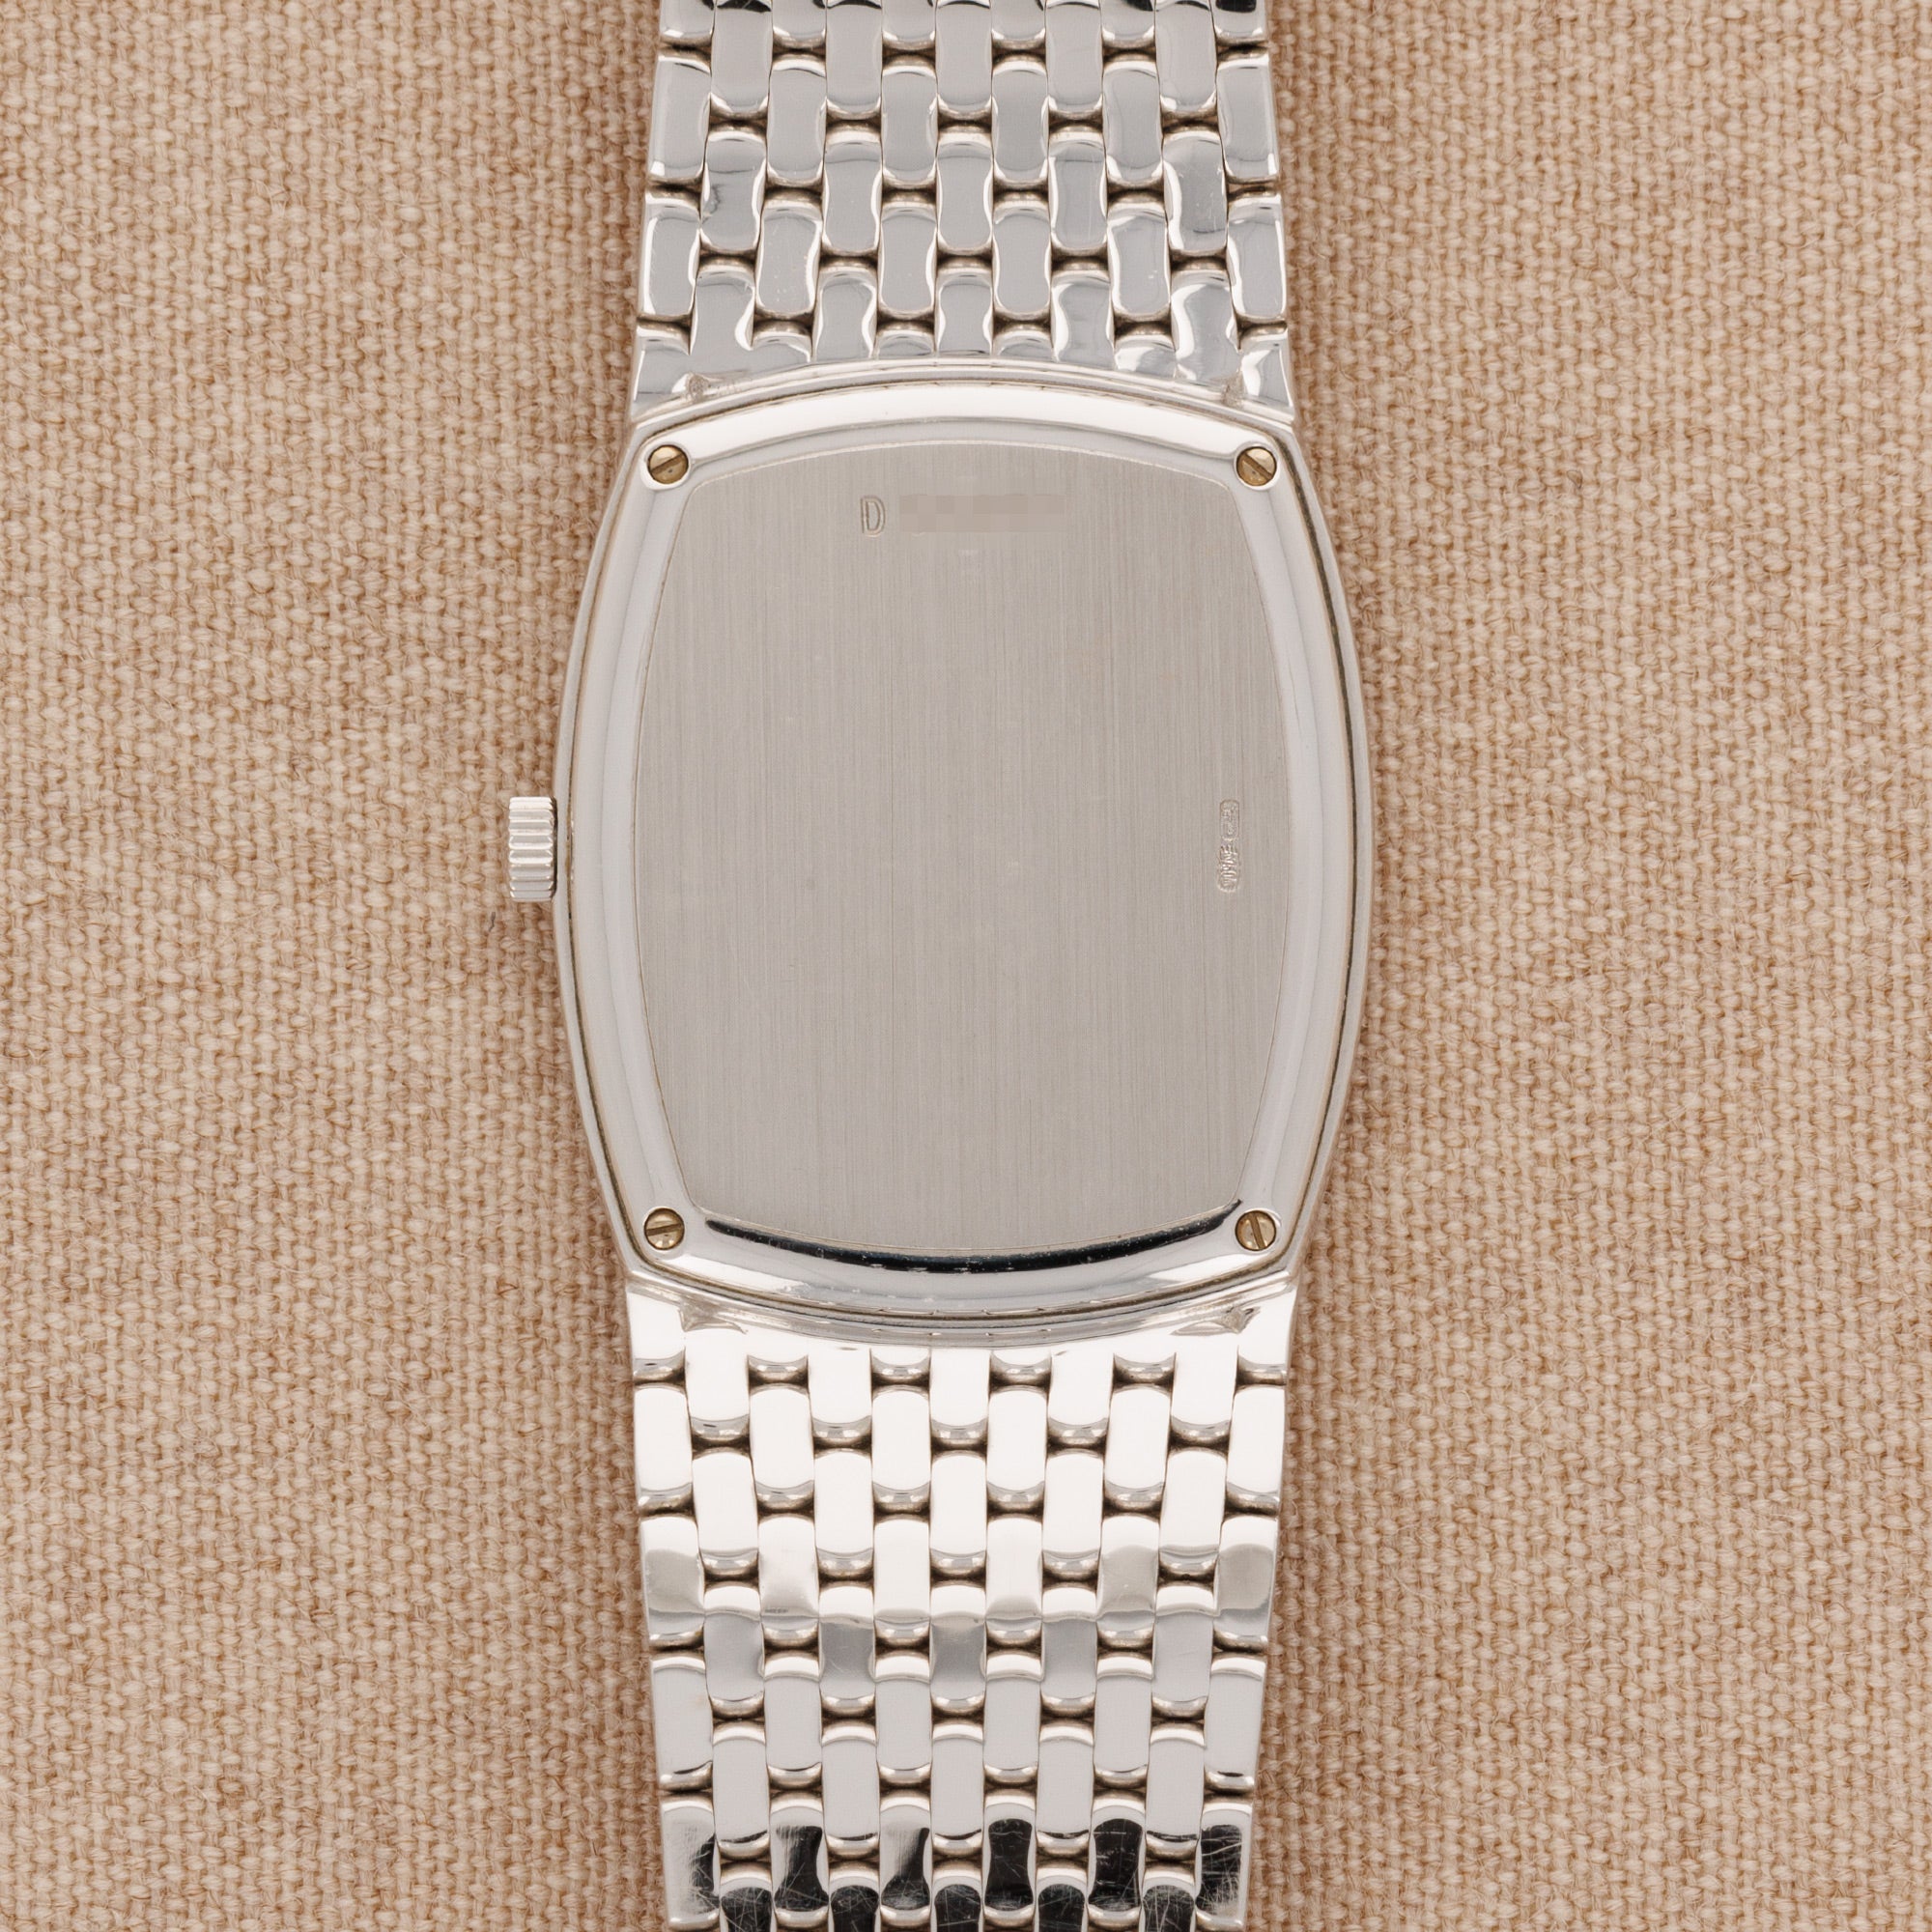 Audemars Piguet - Audemars Piguet White Gold Watch Ref. 14579BC in Like New Condition - The Keystone Watches